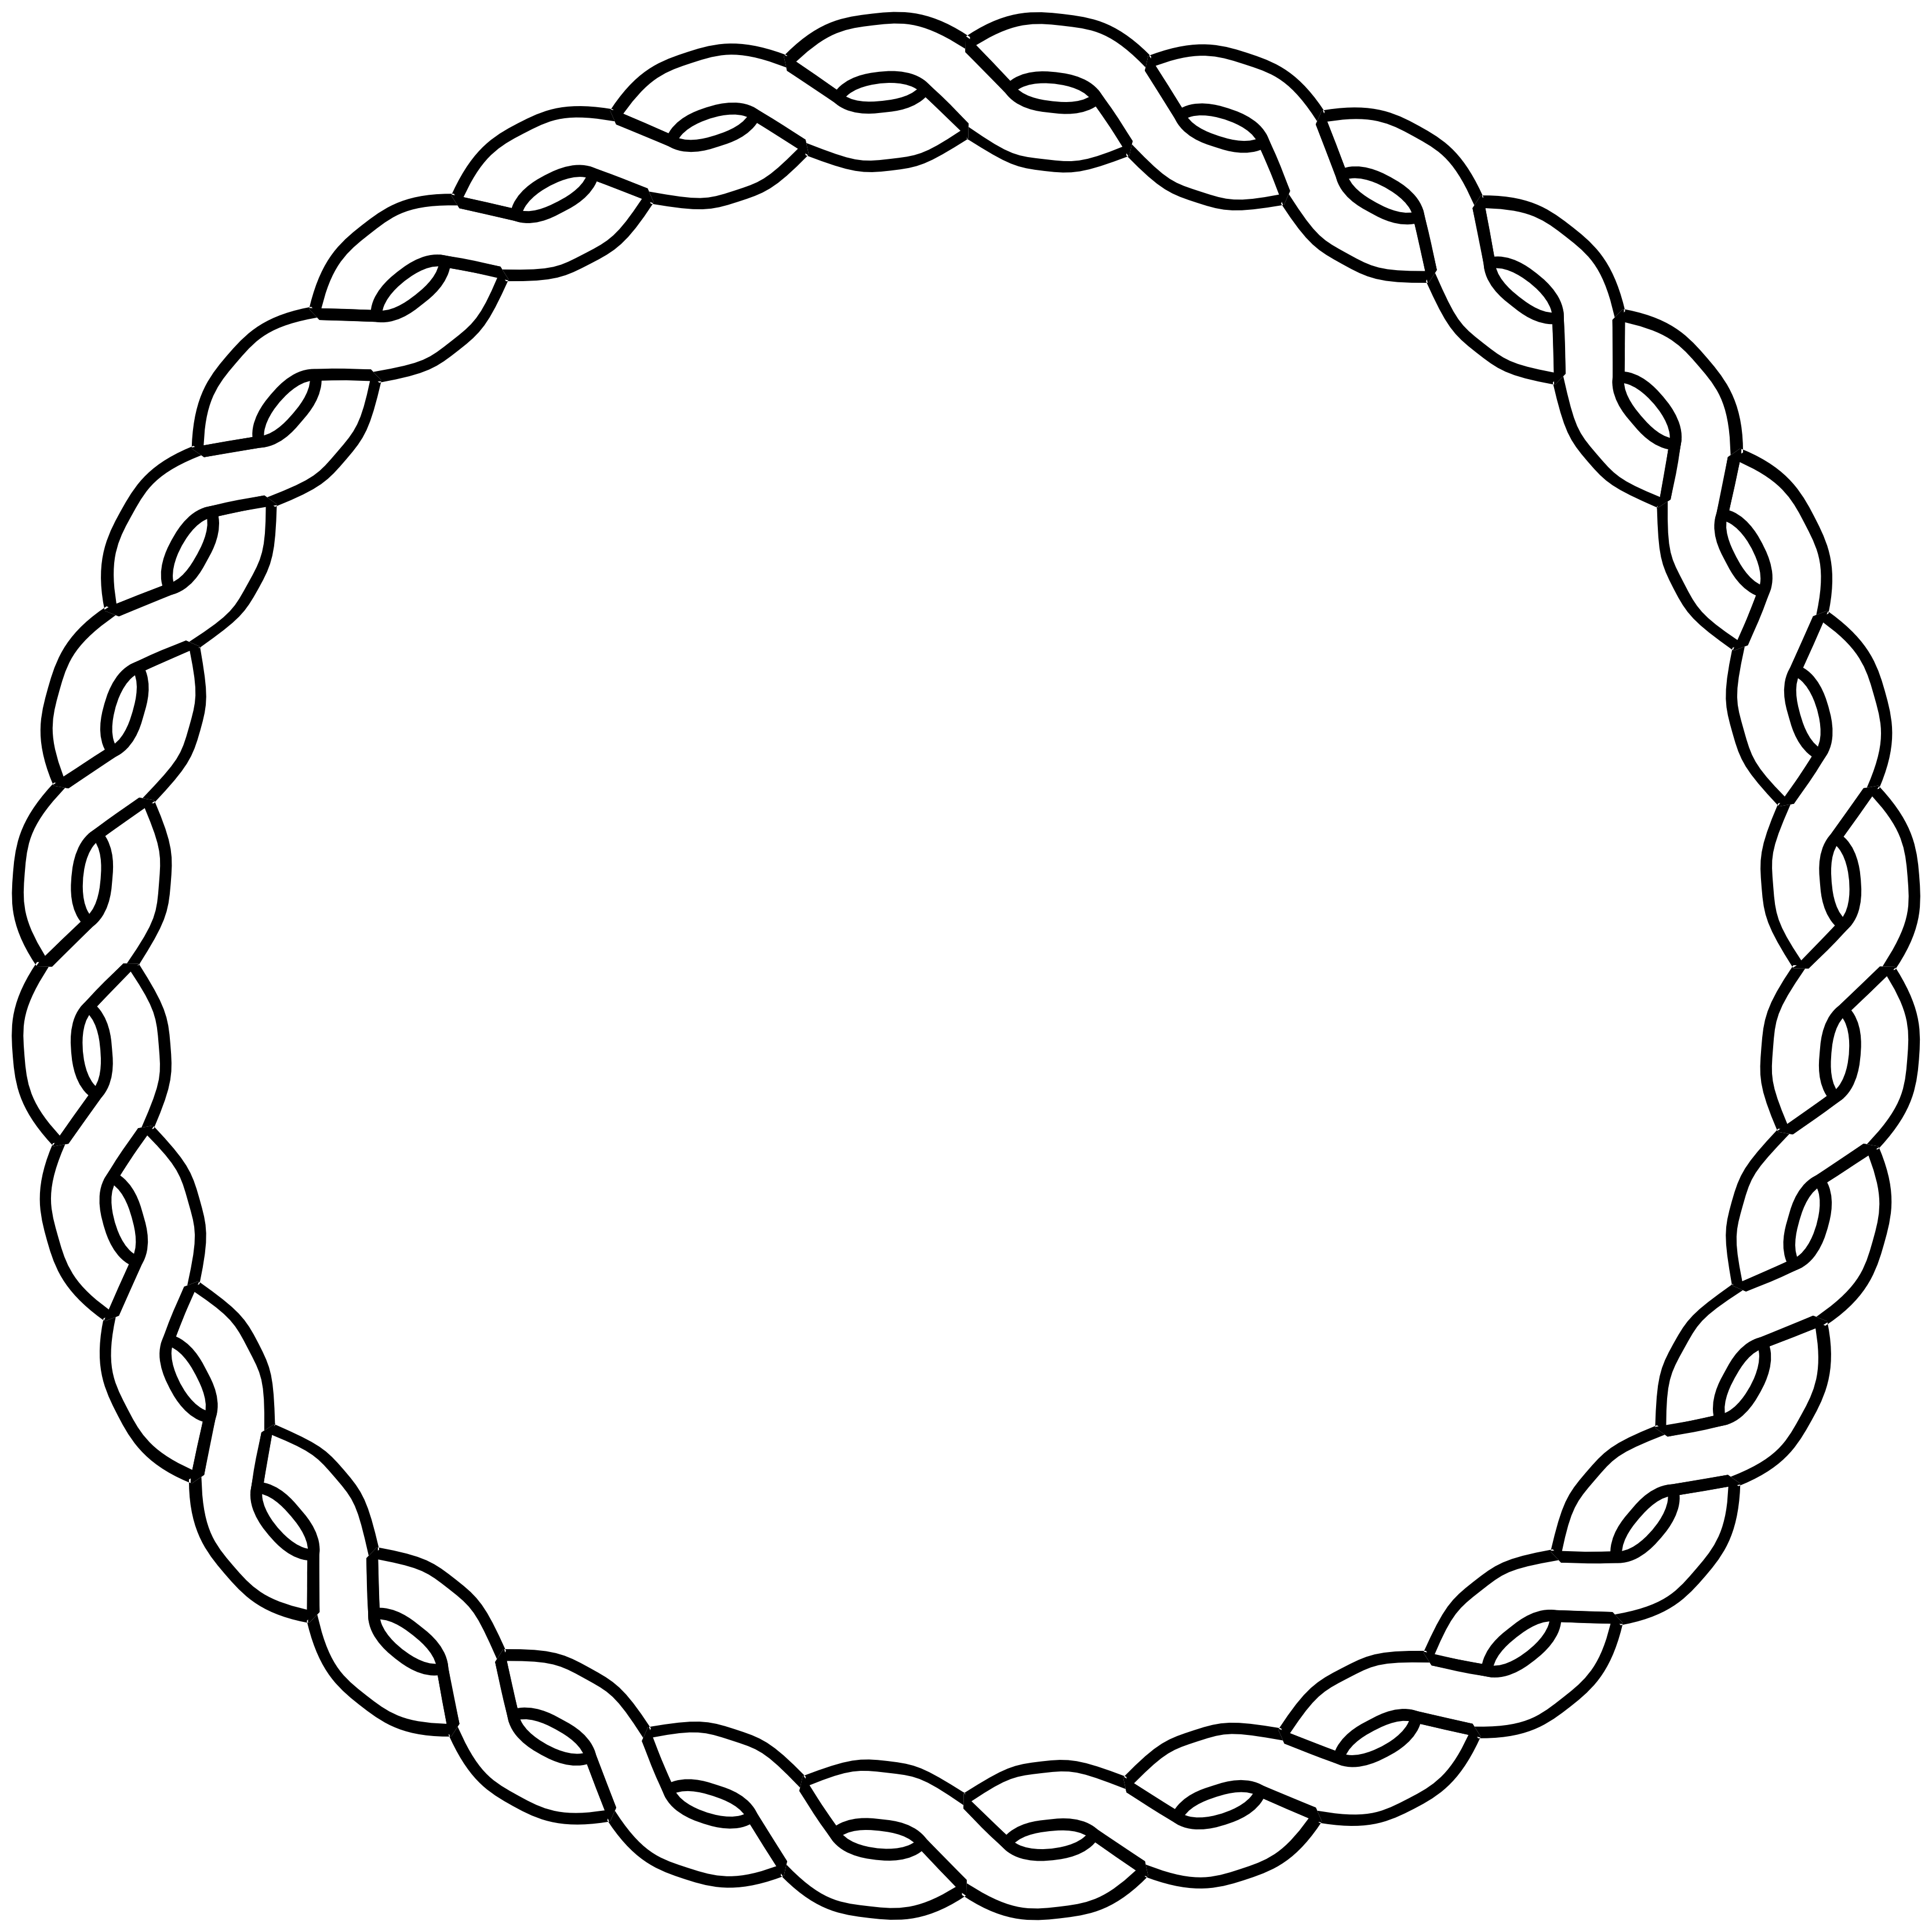 Clipart circular borders